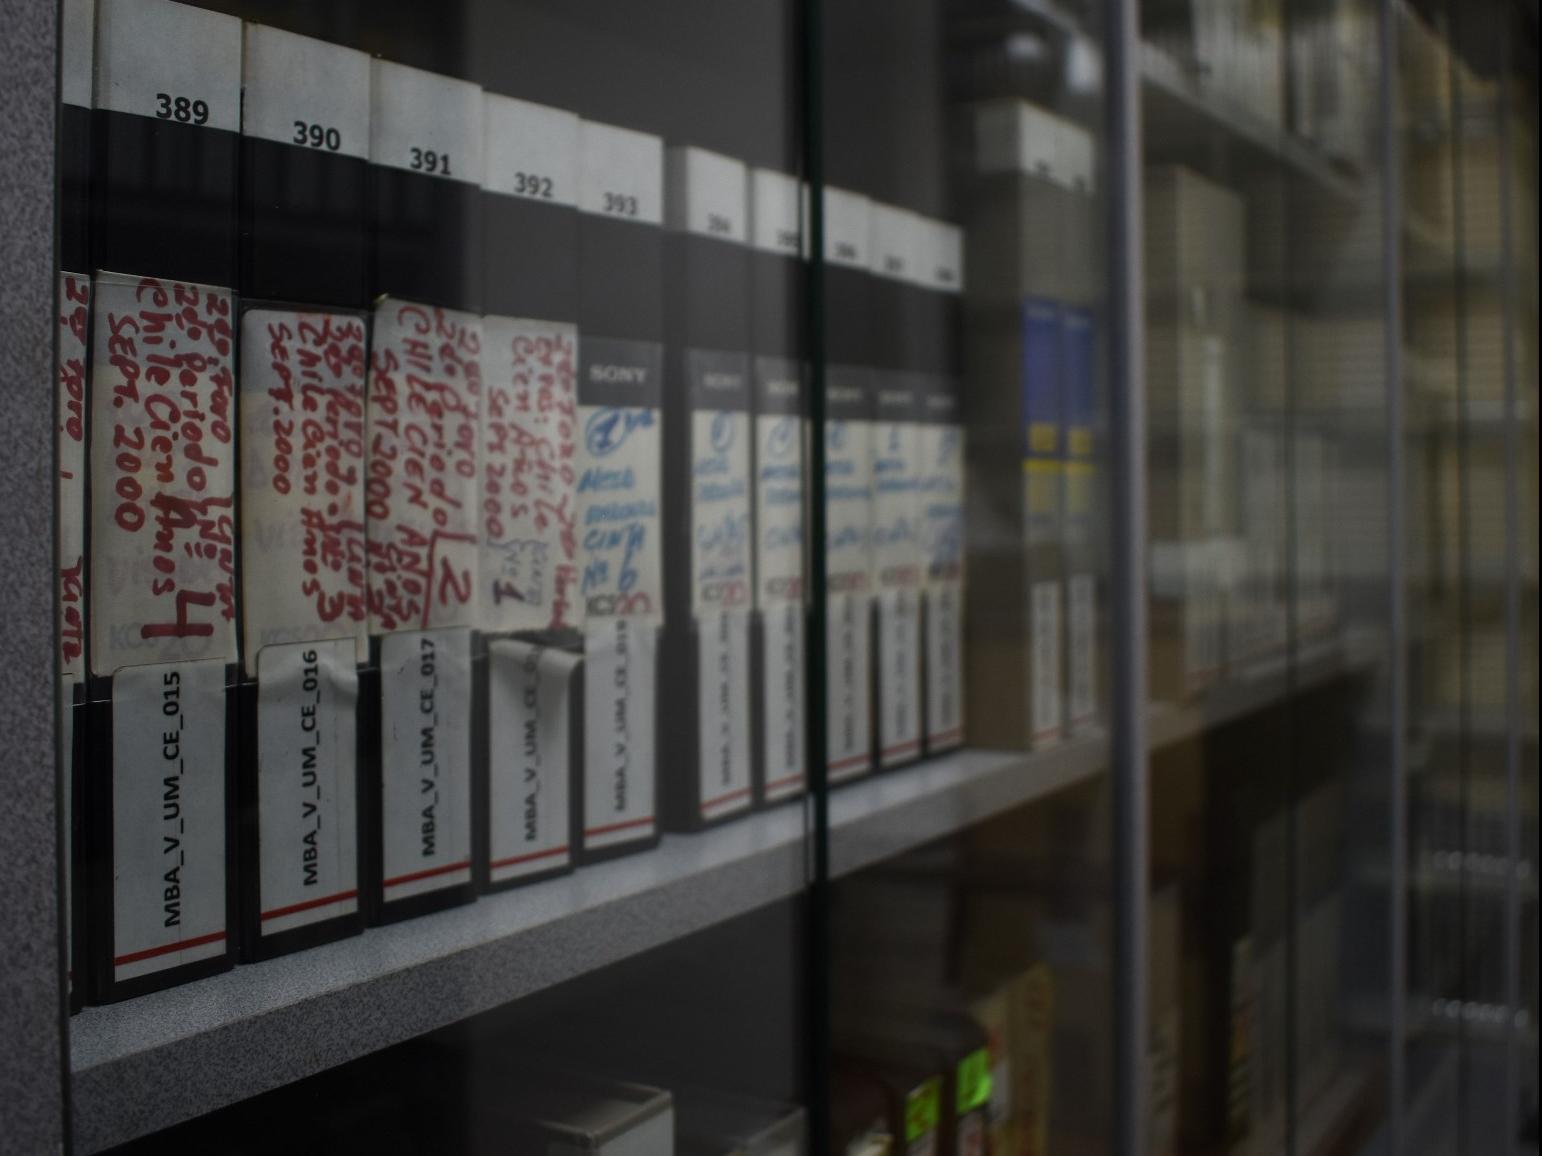 Fotografía de un estante con cassettes de video